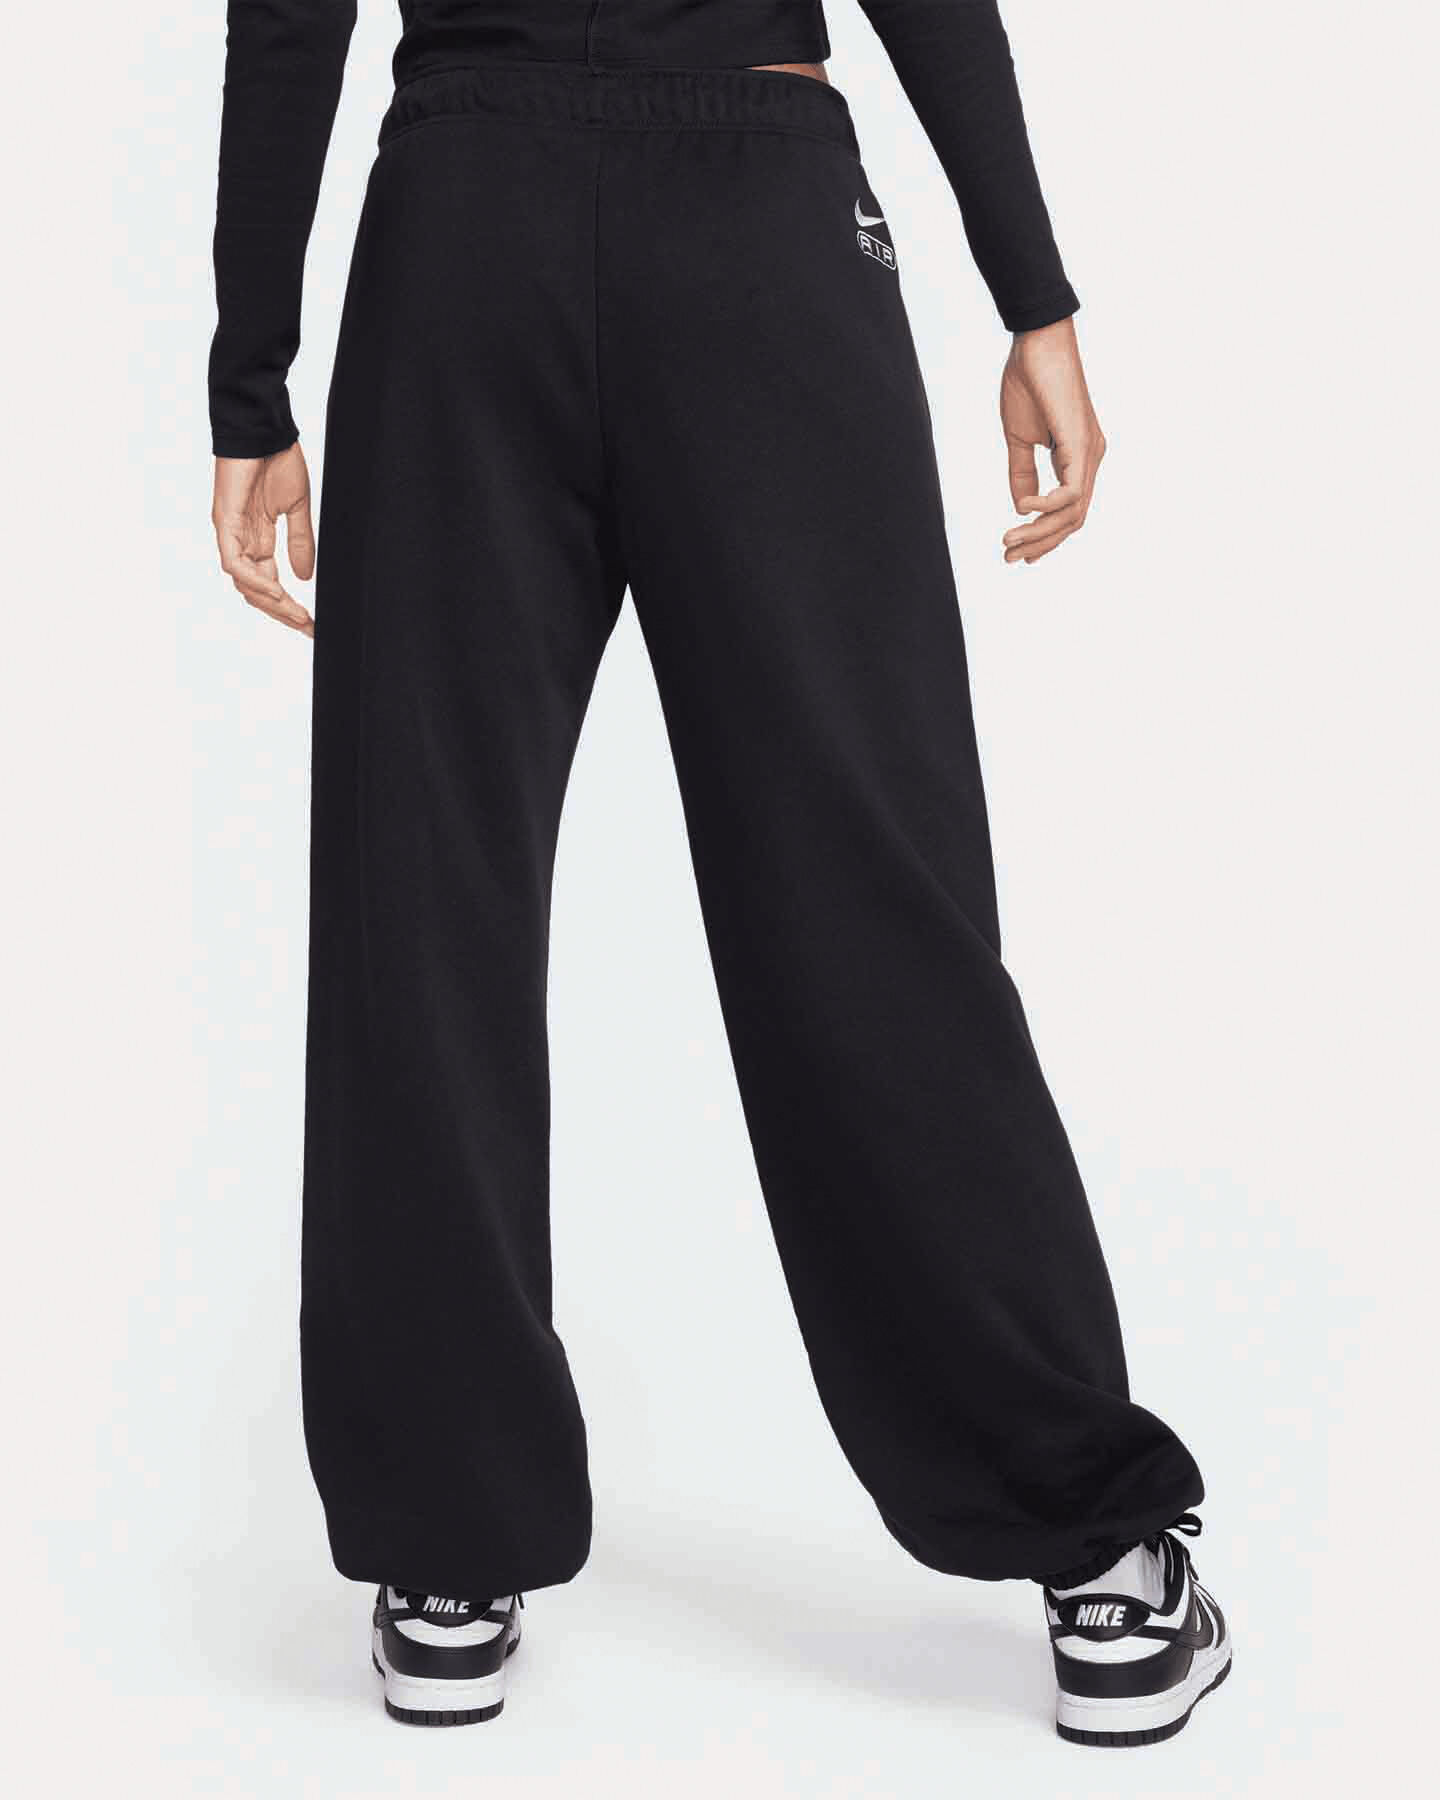  Pantalone NIKE OVER BIG LOGO W S5644459|010|XS scatto 1